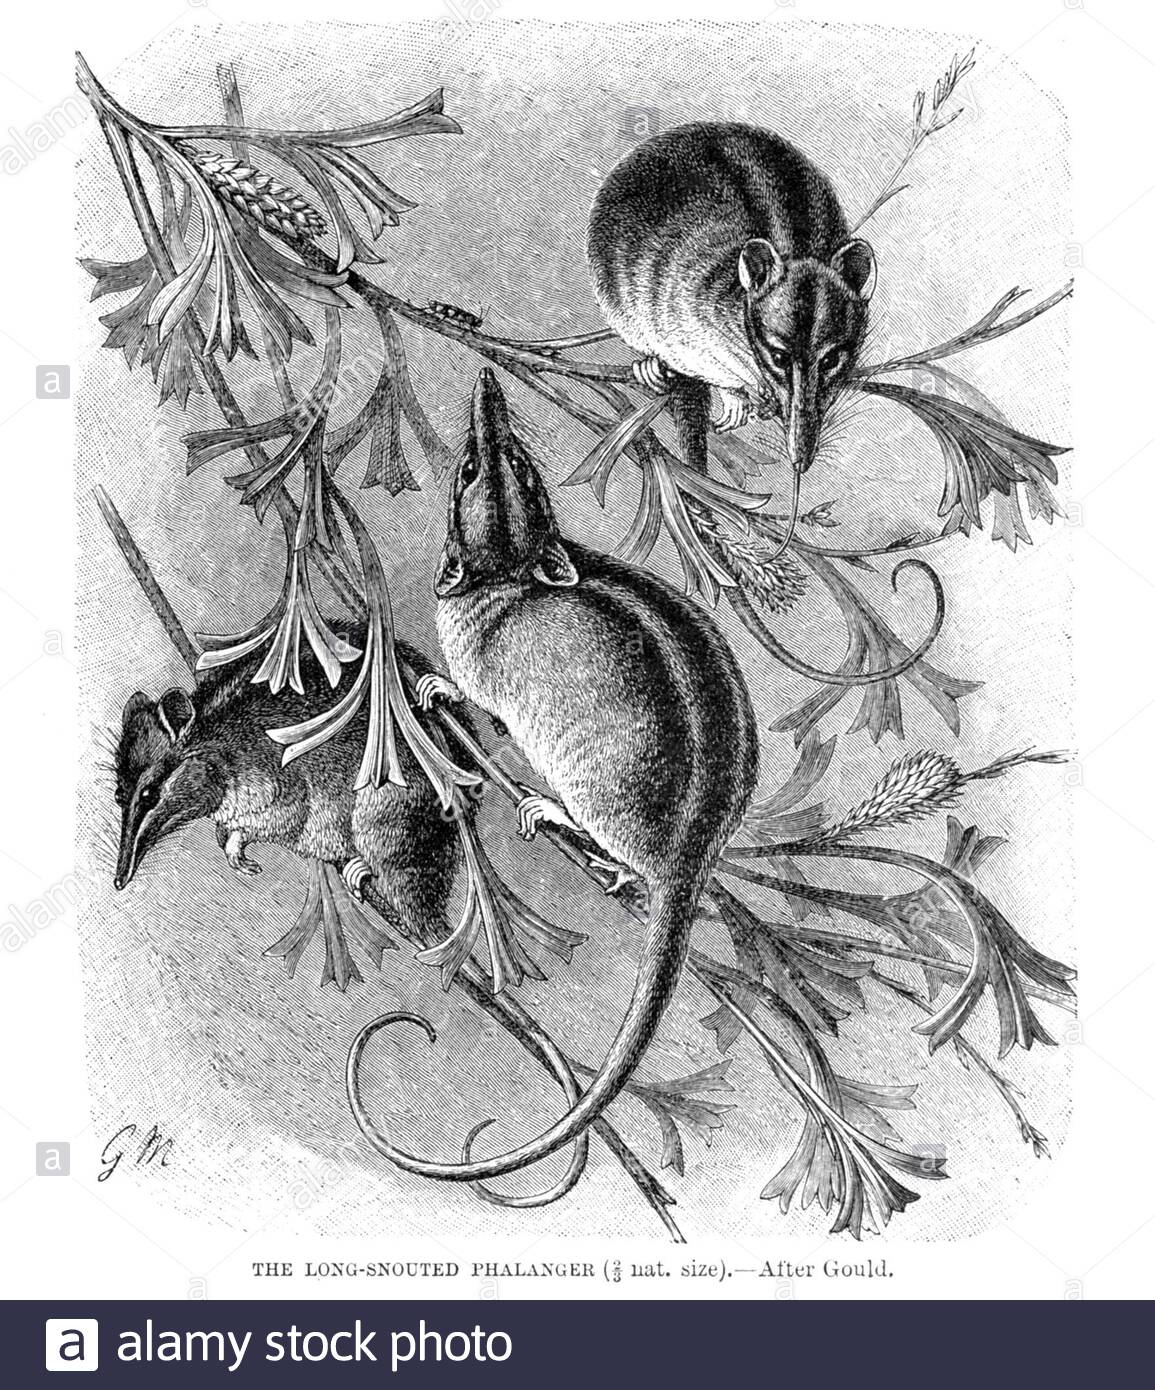 Lungo serpente Phalanger, illustrazione vintage del 1894 Foto Stock